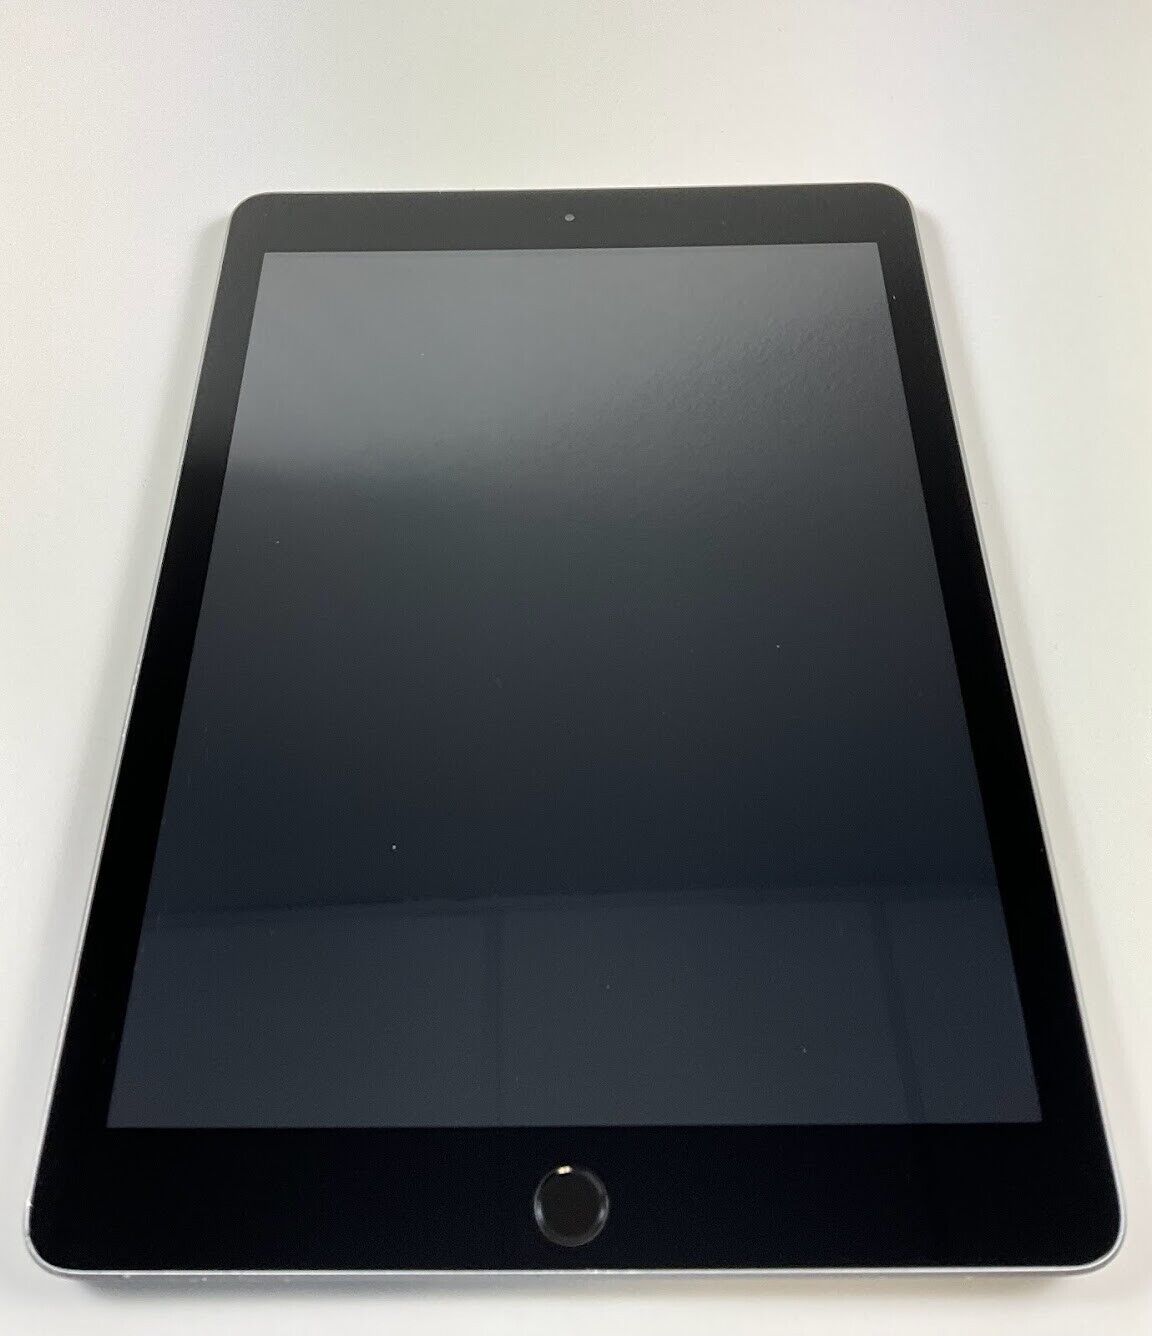 (Defective Fingerprint) Apple iPad 6th Gen. 128GB, Wi-Fi, 9.7in - Space Gray 